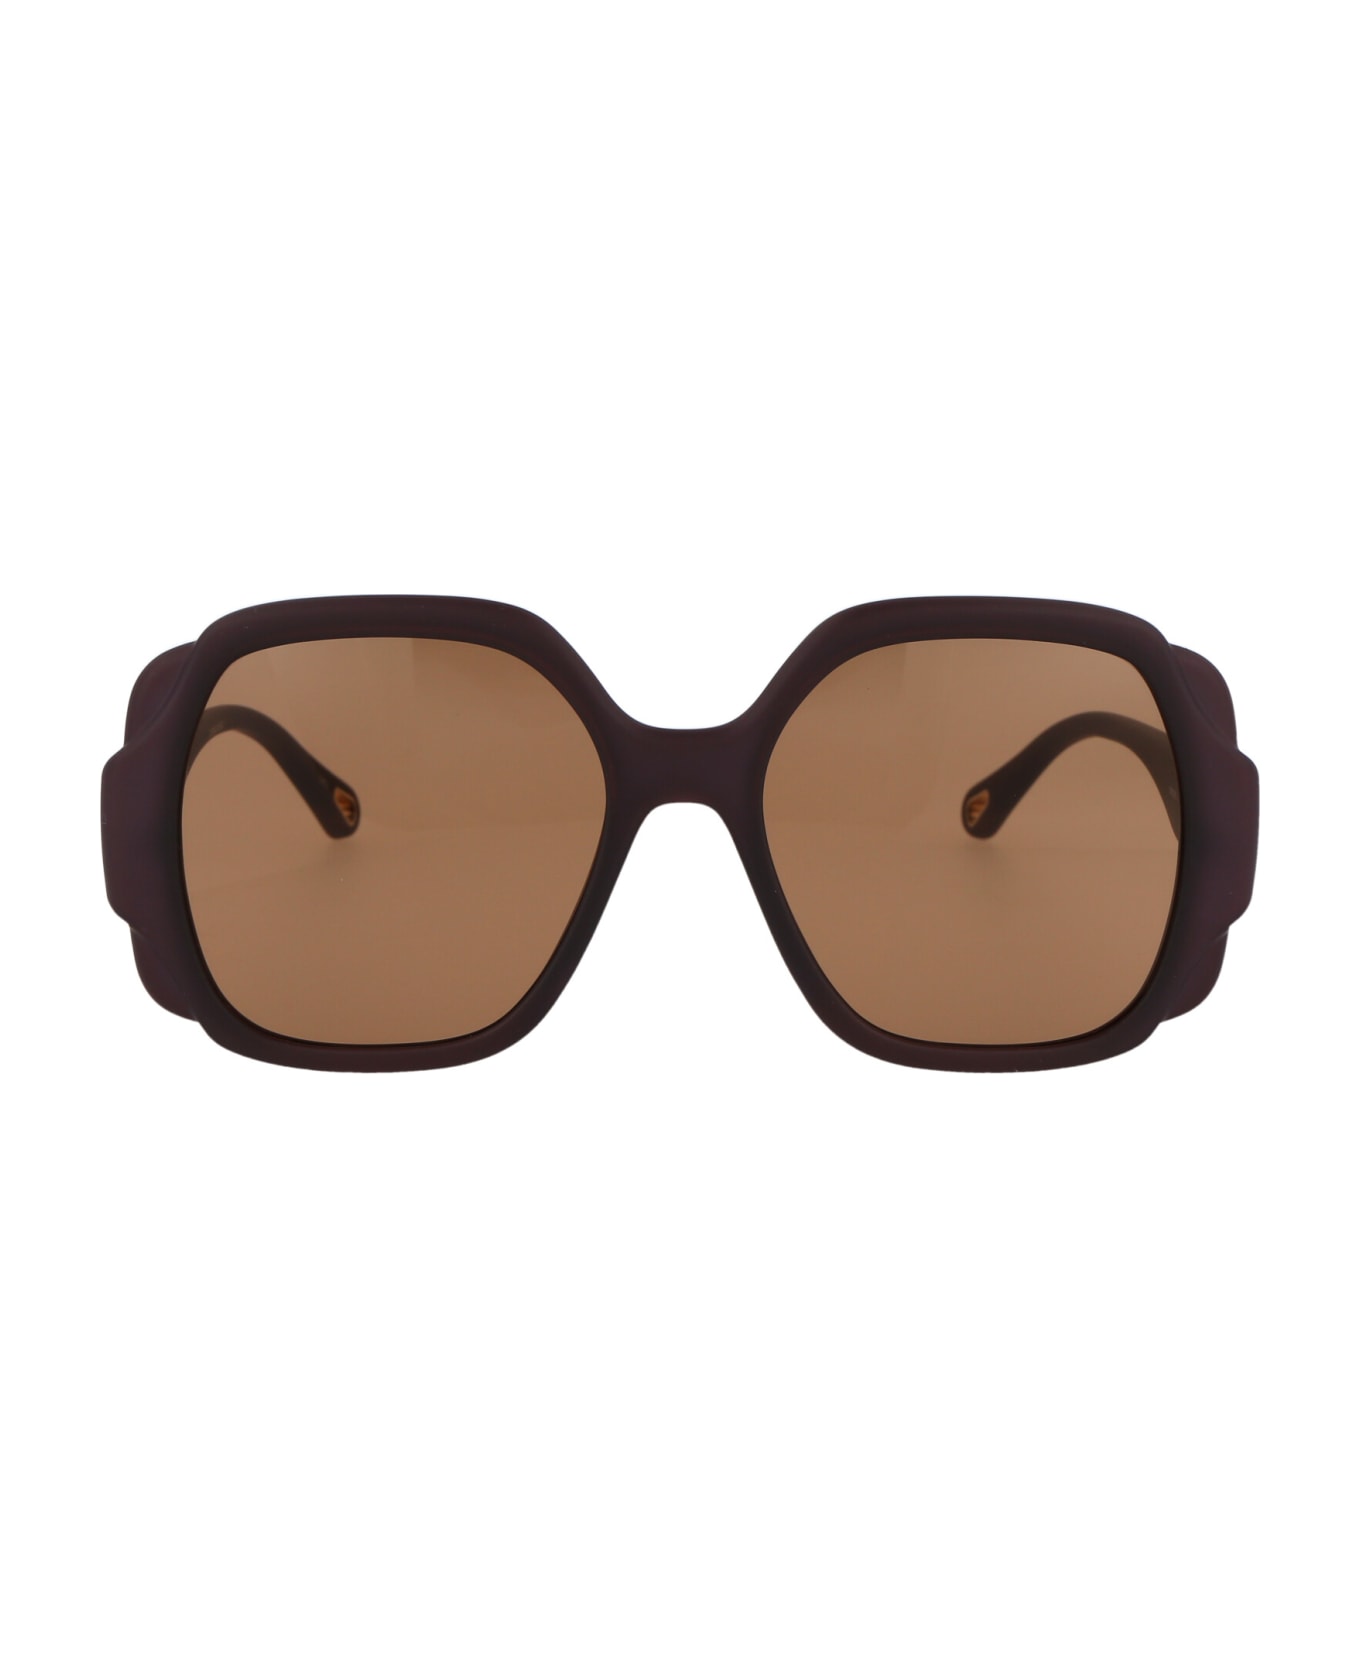 Chloé Eyewear Ch0121s Sunglasses - 001 BROWN BROWN BROWN